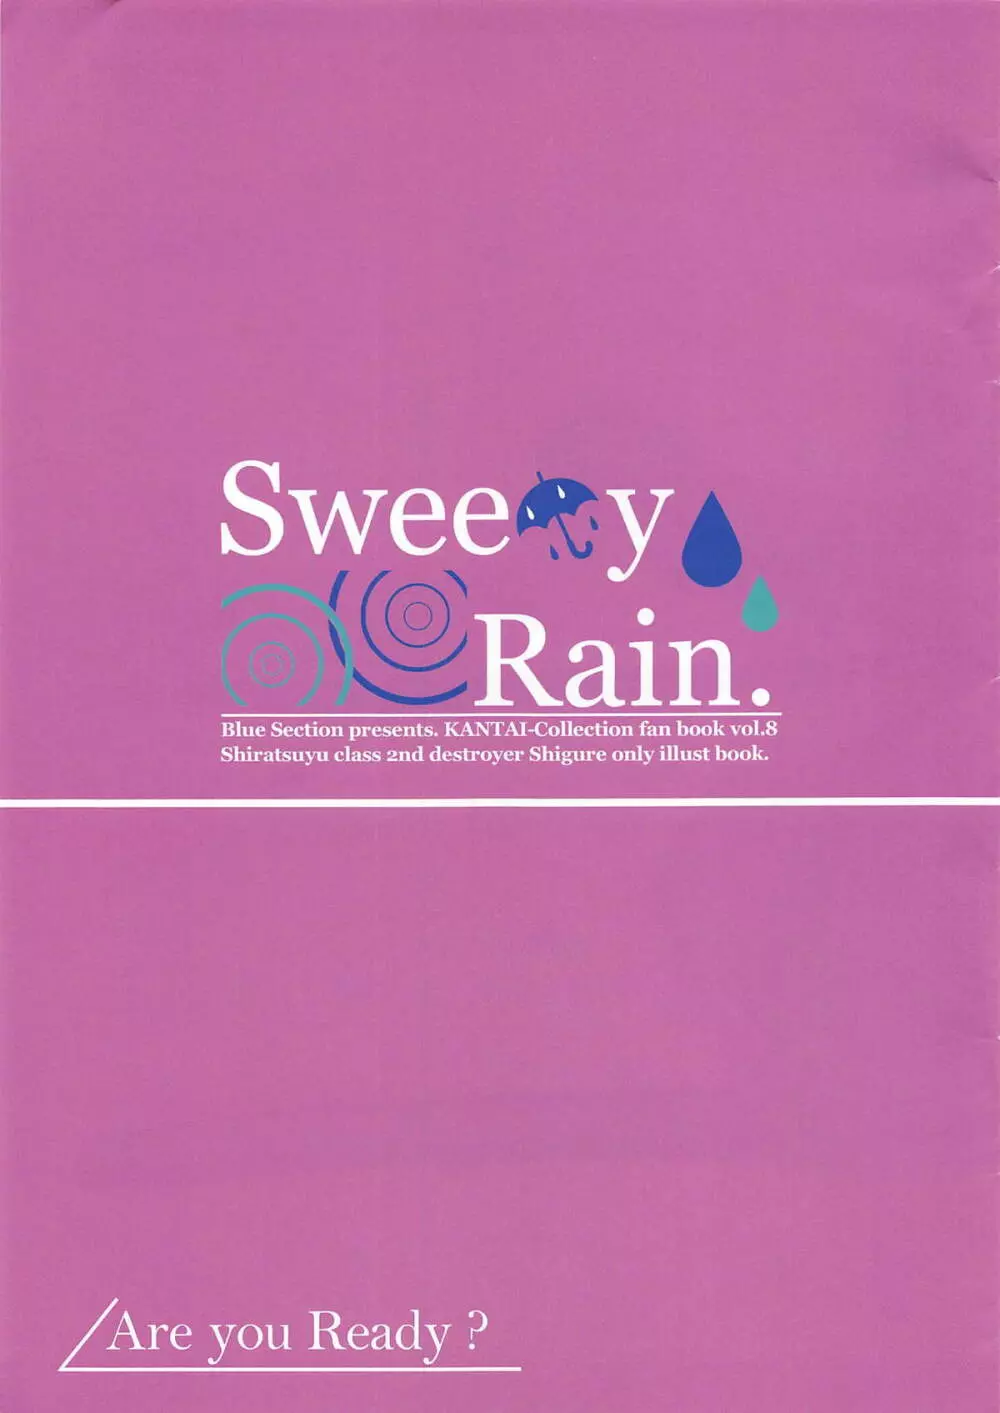 Sweety Rain. 2ページ